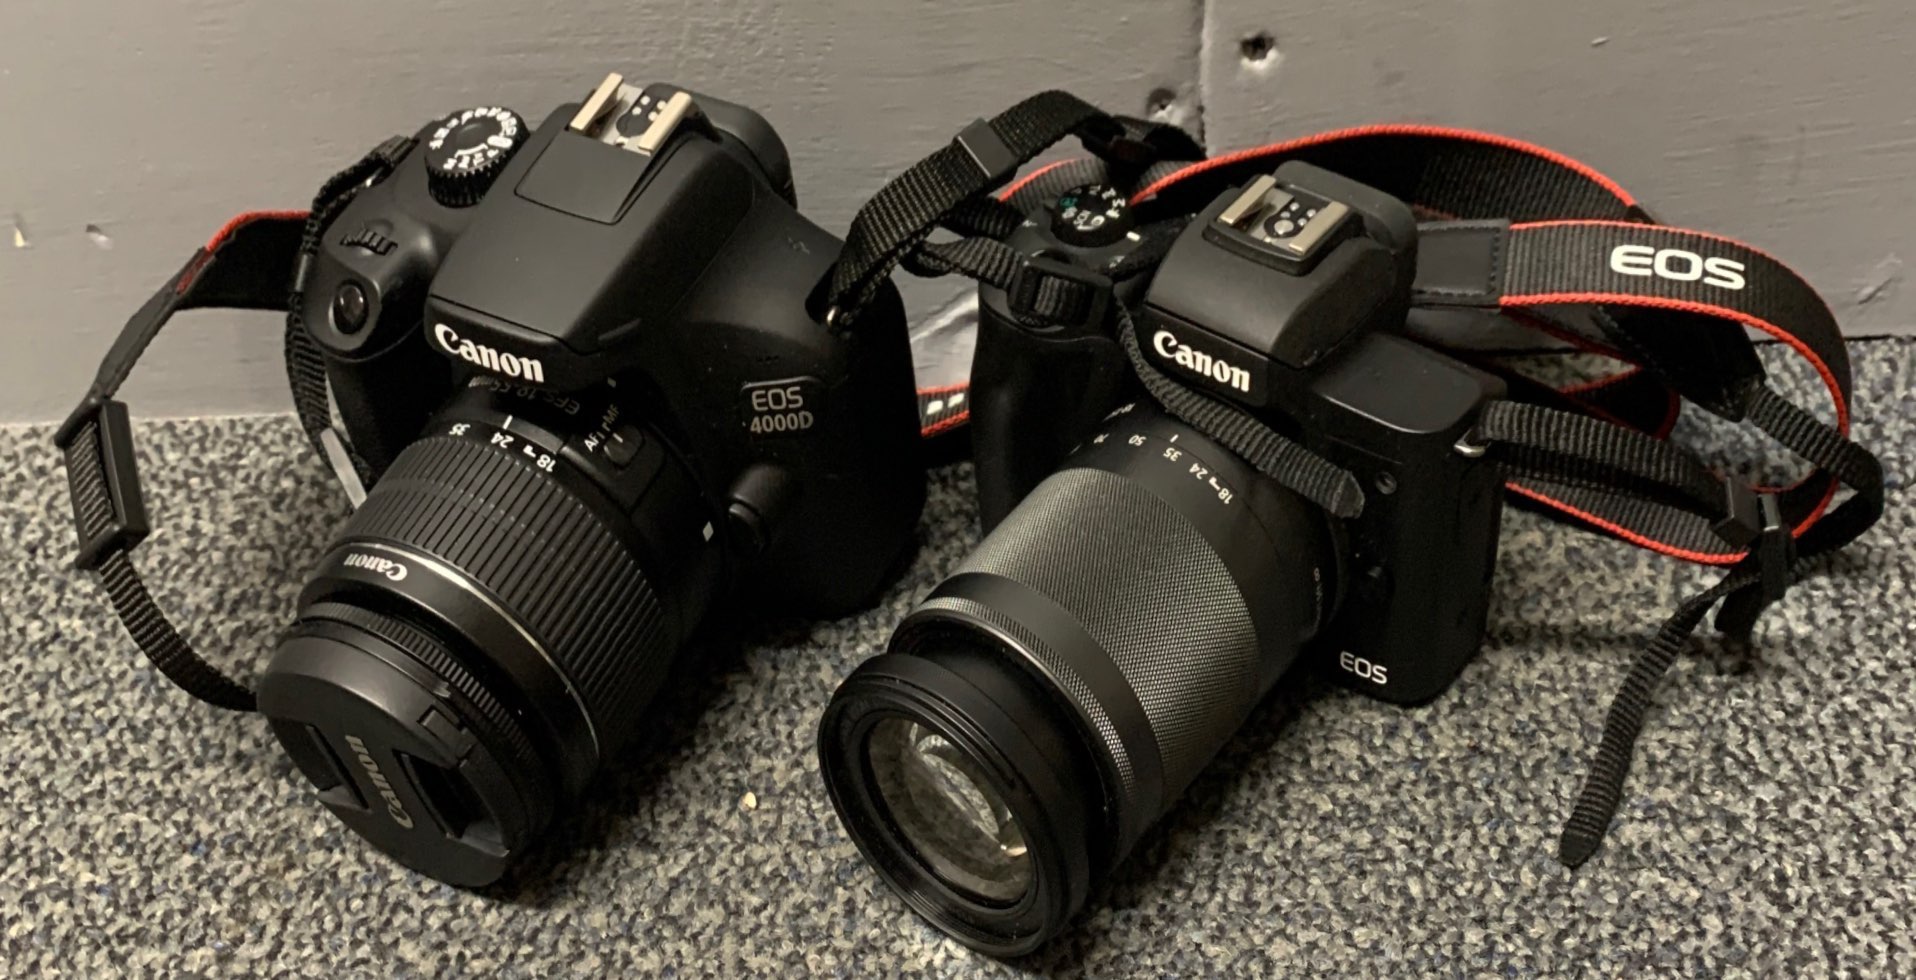 A Canon single lens reflex digital camera with Canon zoom lens and a Canon EOS 4000D with Canon zoom